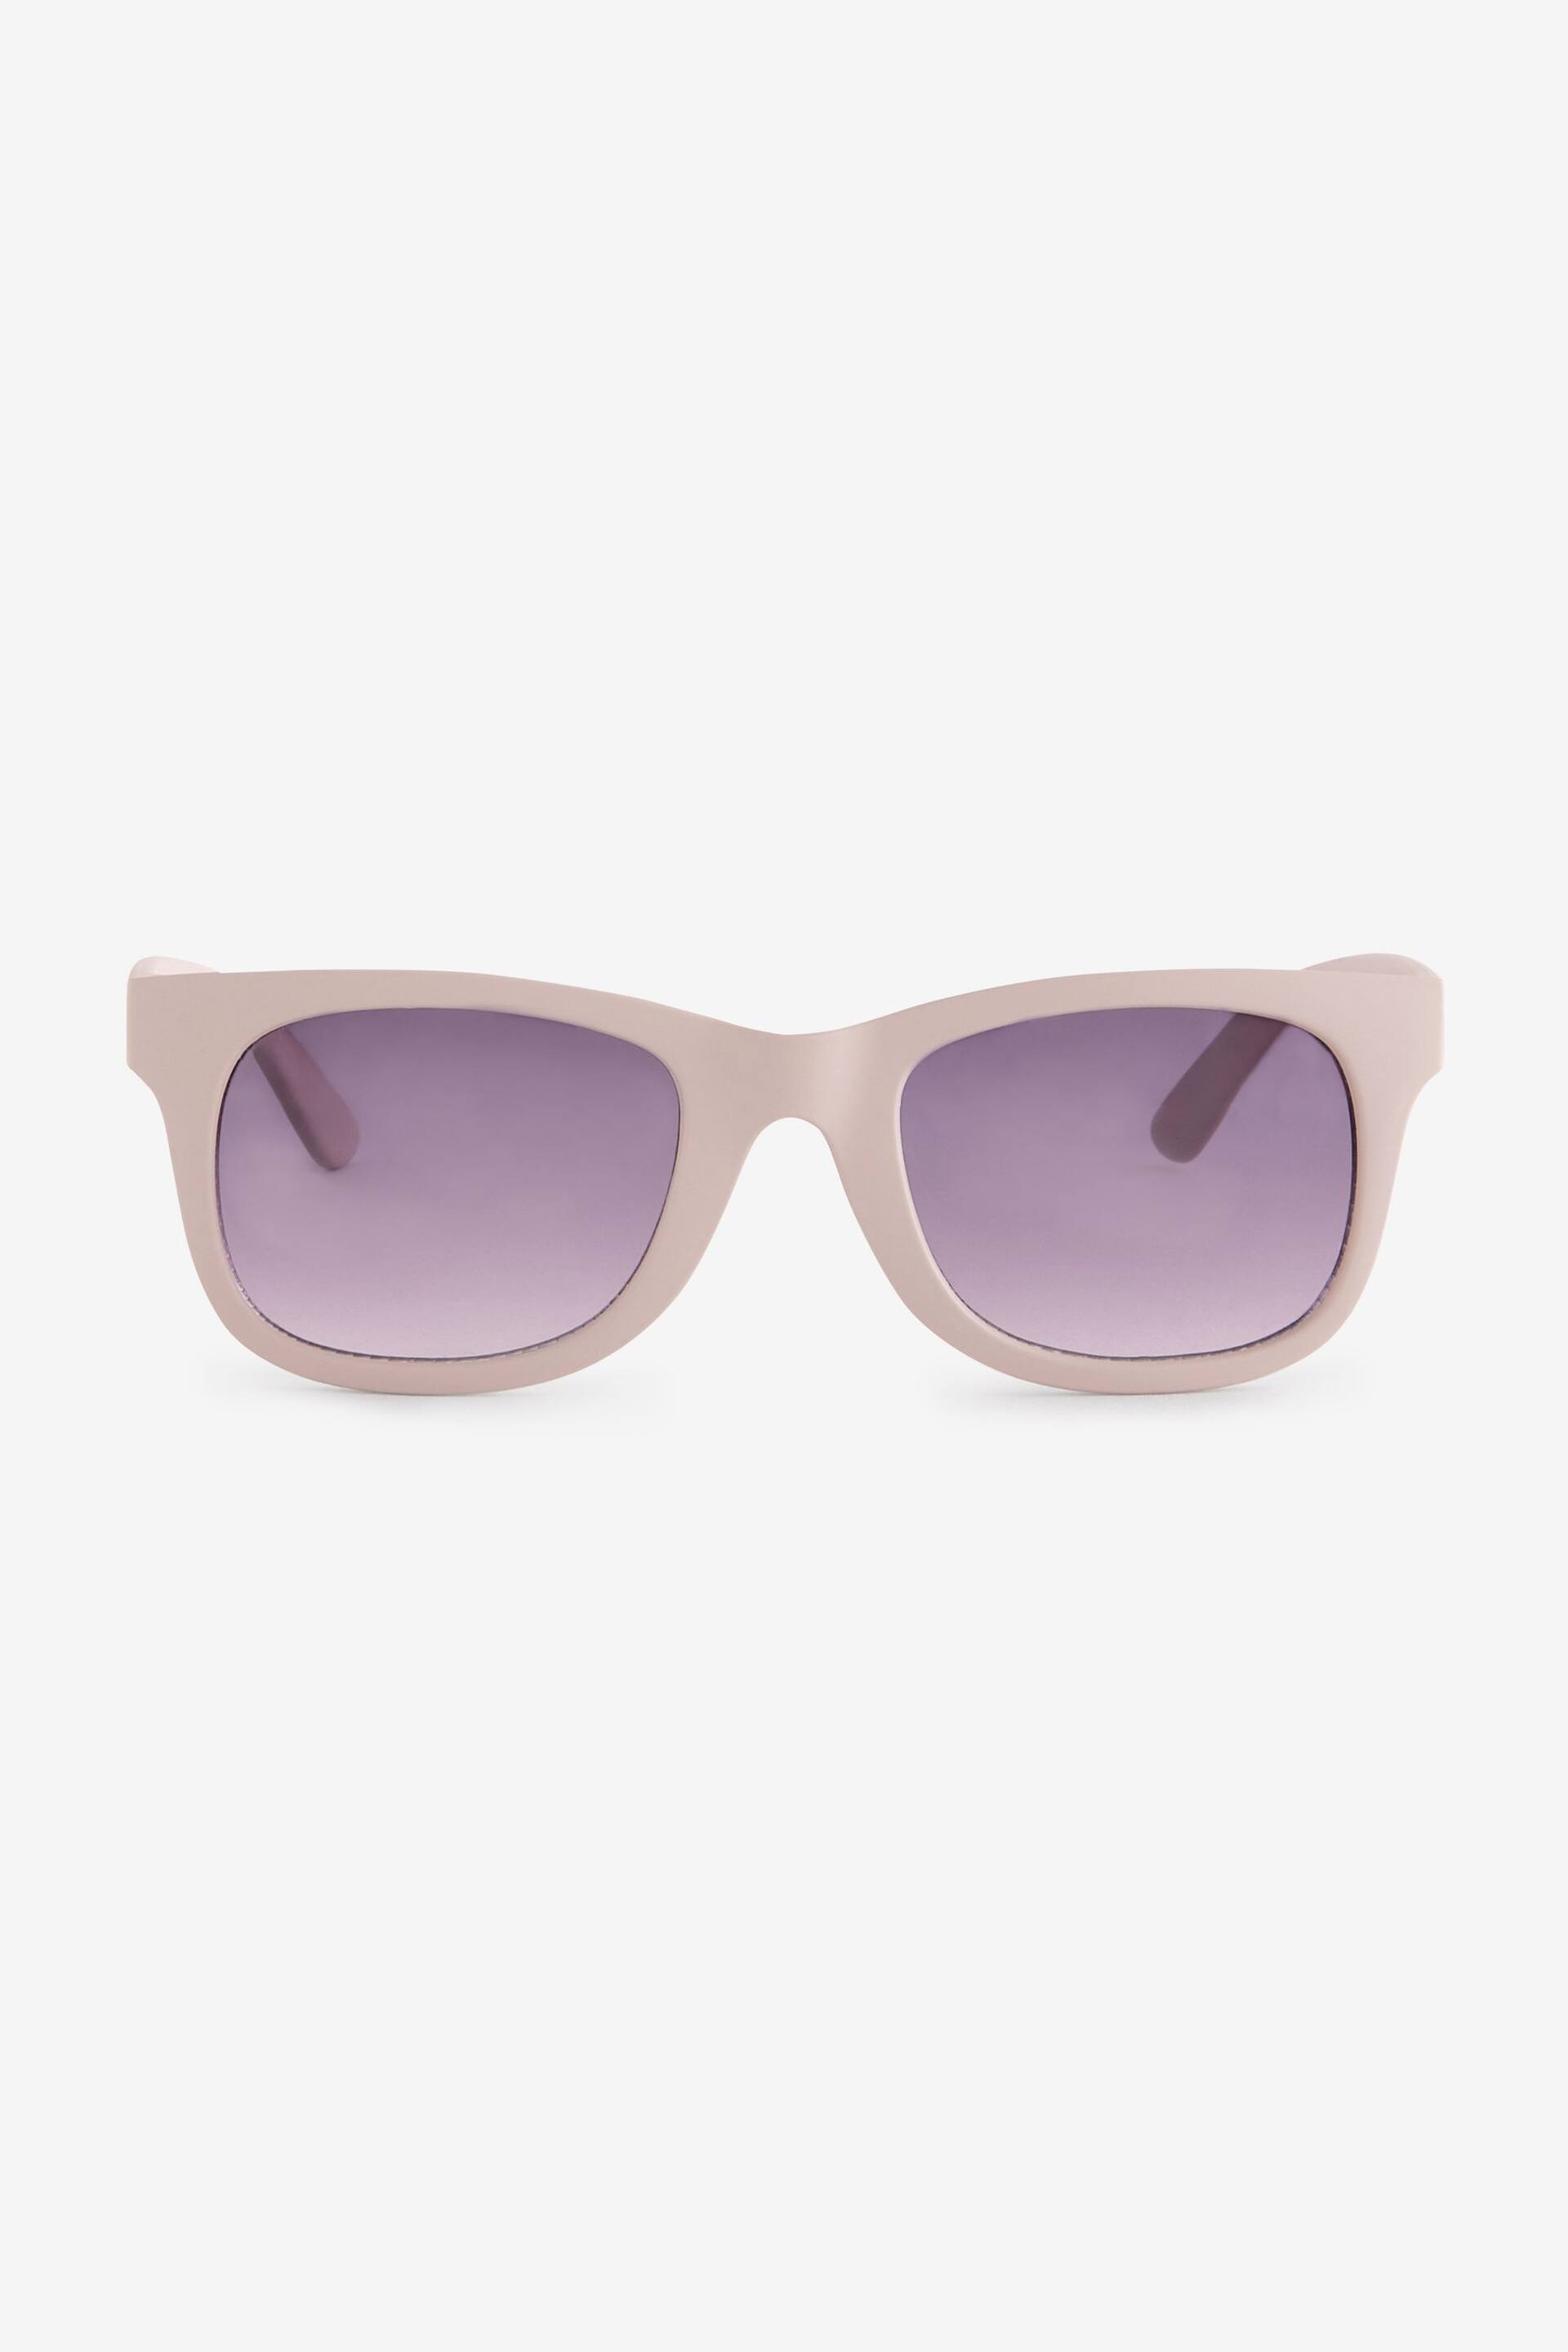 Neutral Preppy Sunglasses - Image 2 of 3